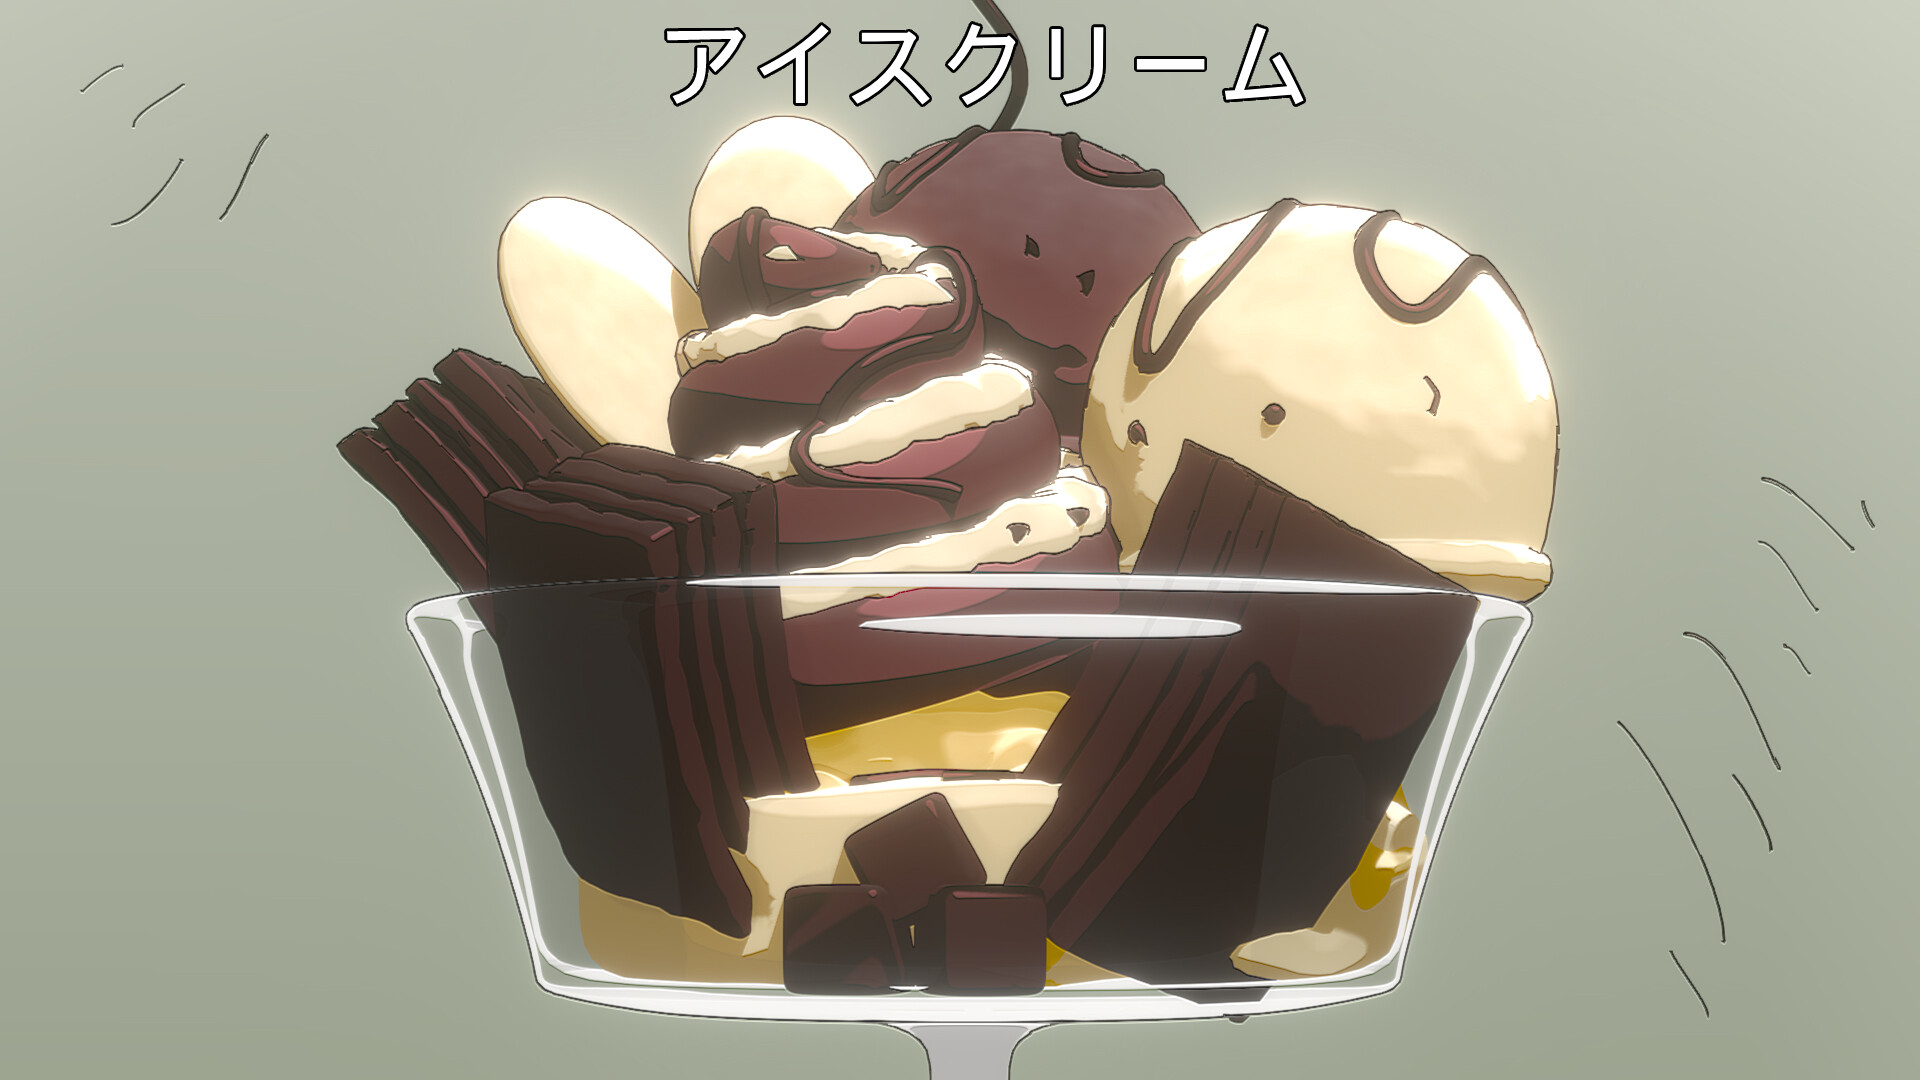 Two anime girl eating ice cream by CptGui